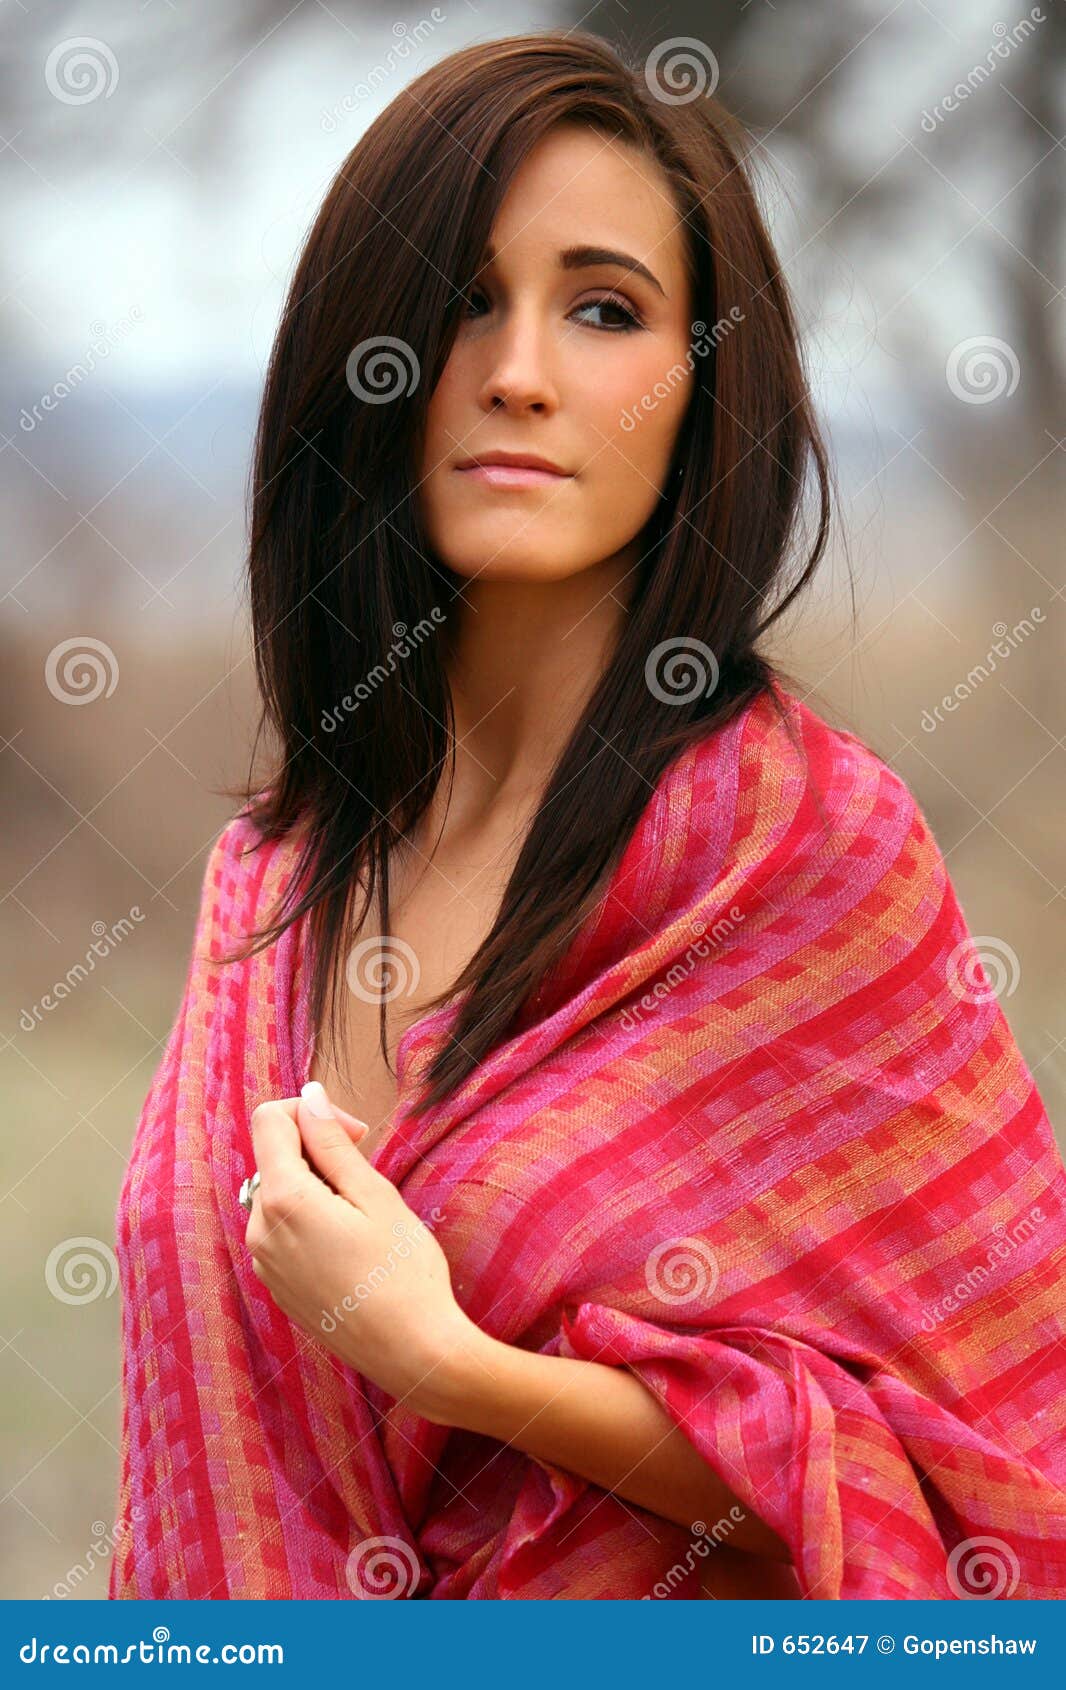 pretty woman in red shawl